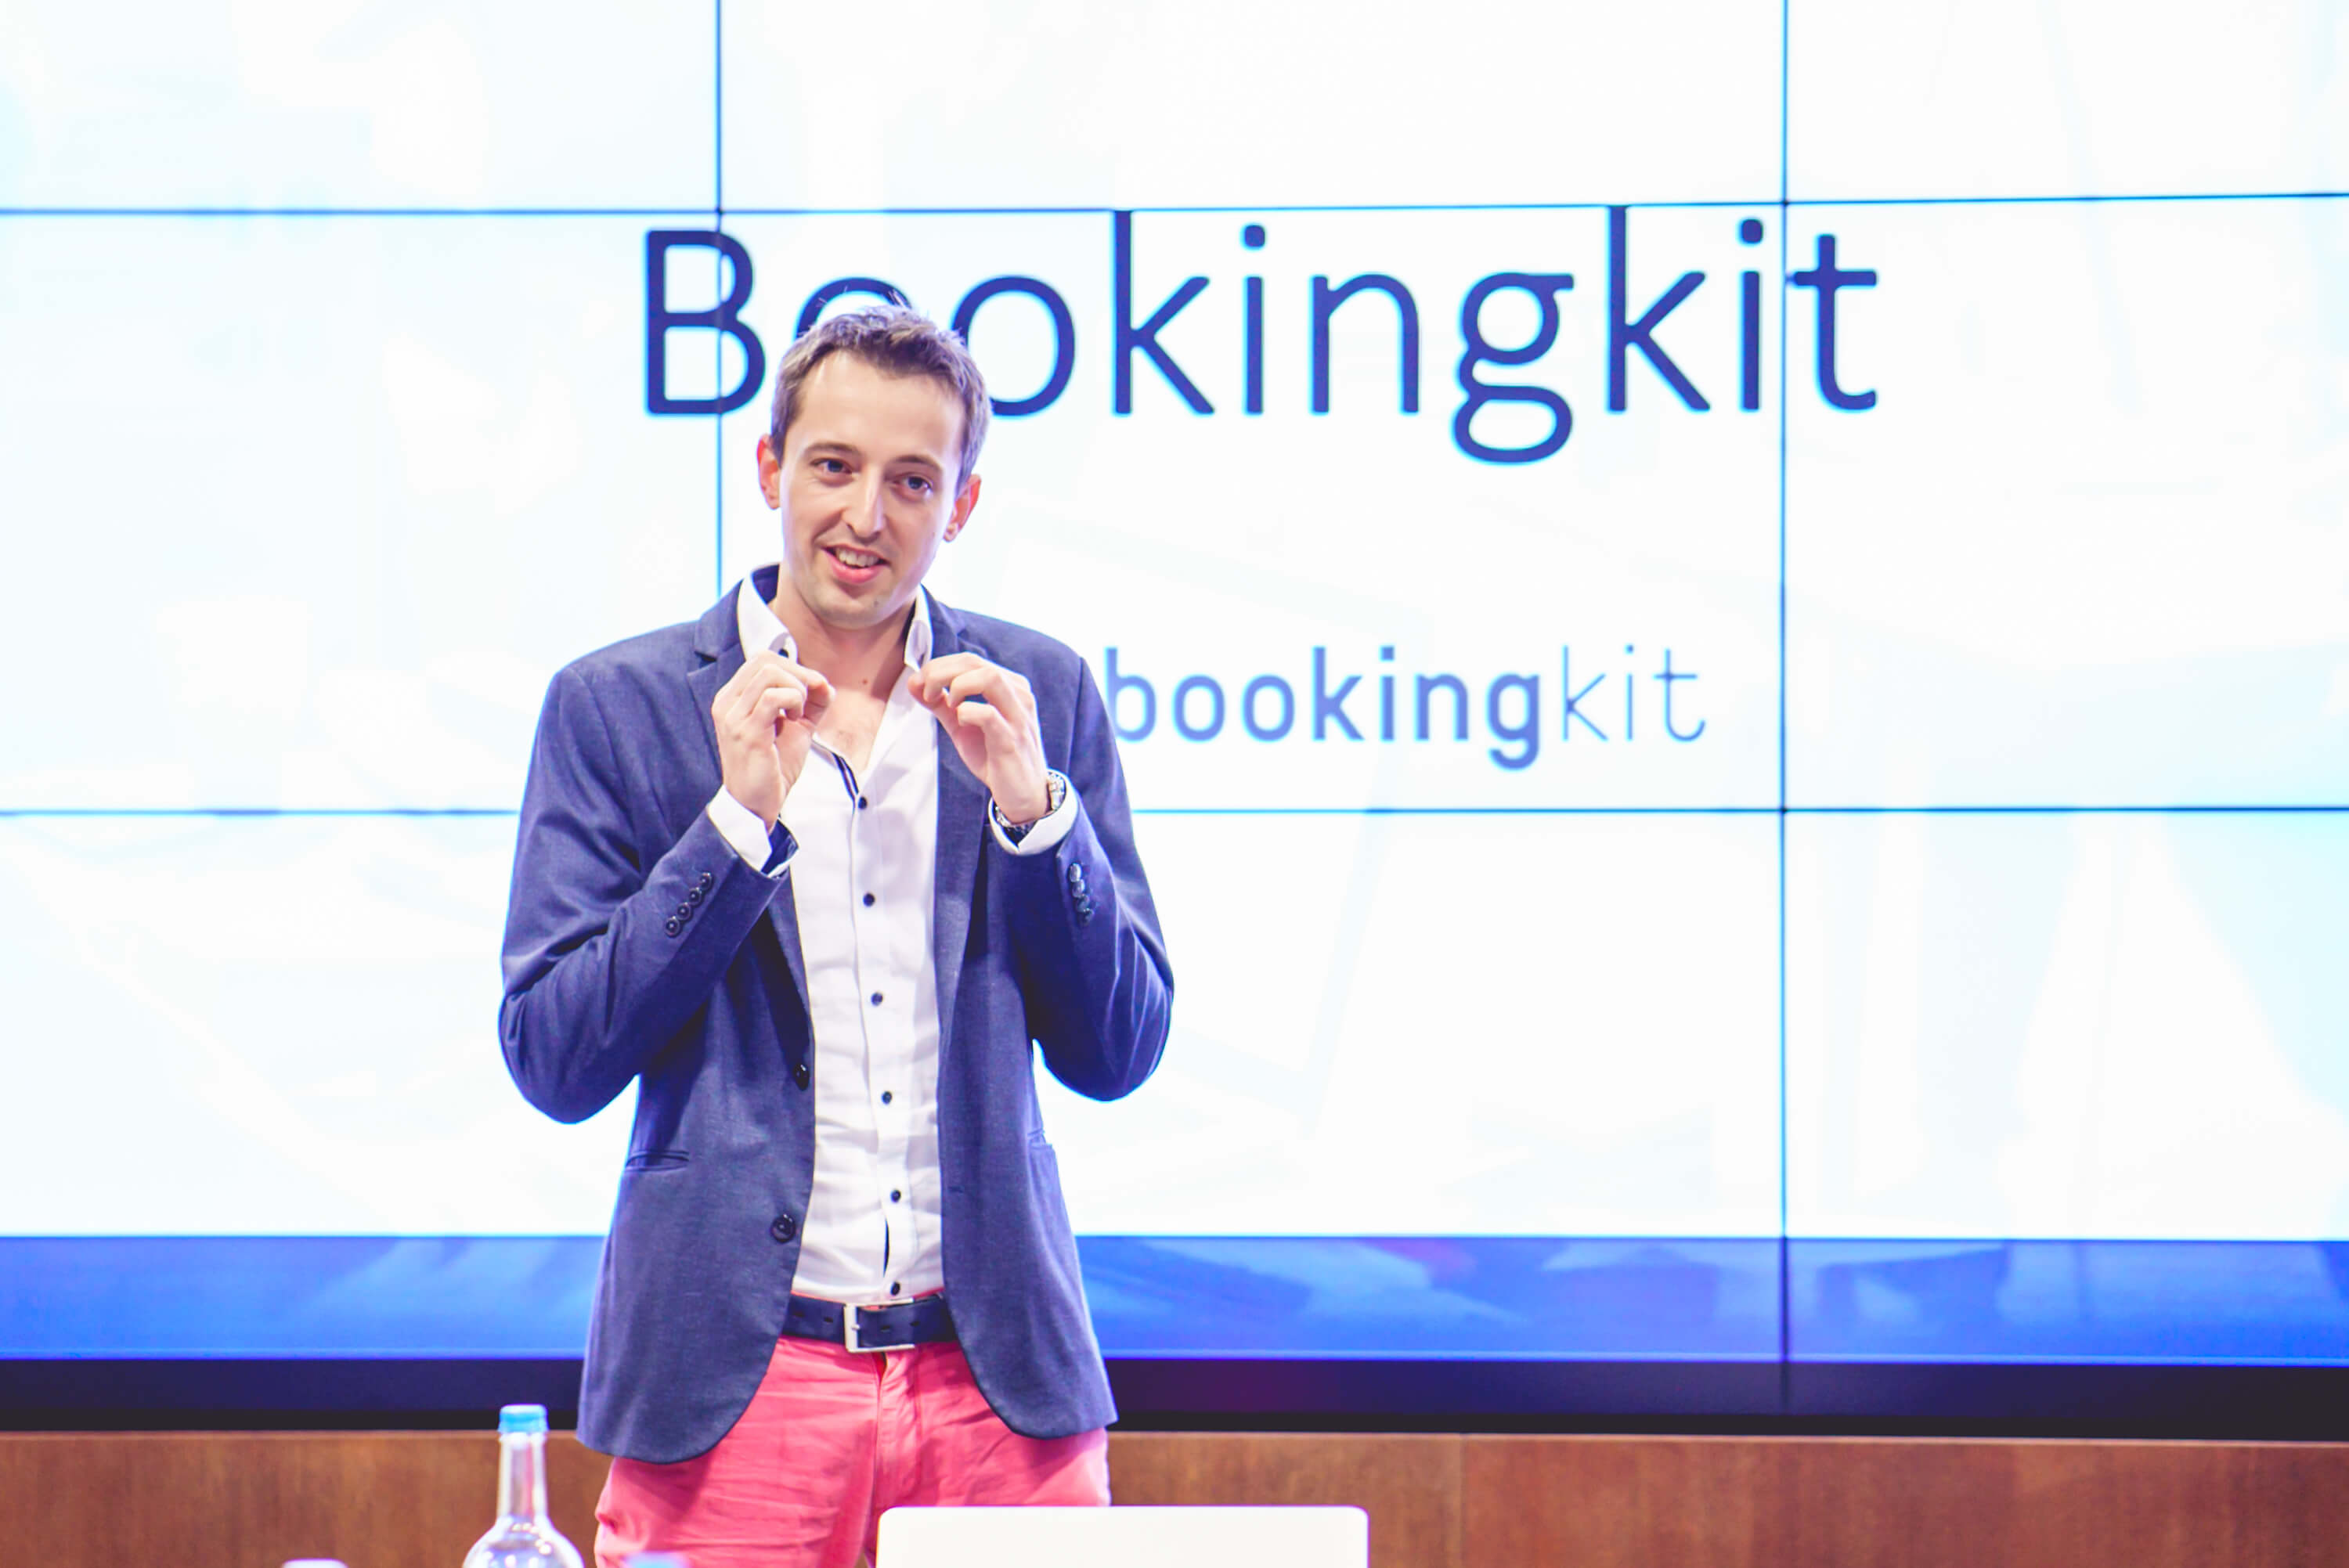 bookingkit-Award-Startup-of-the-Year-2017-VIR-TIC-Lukas-Hempel1